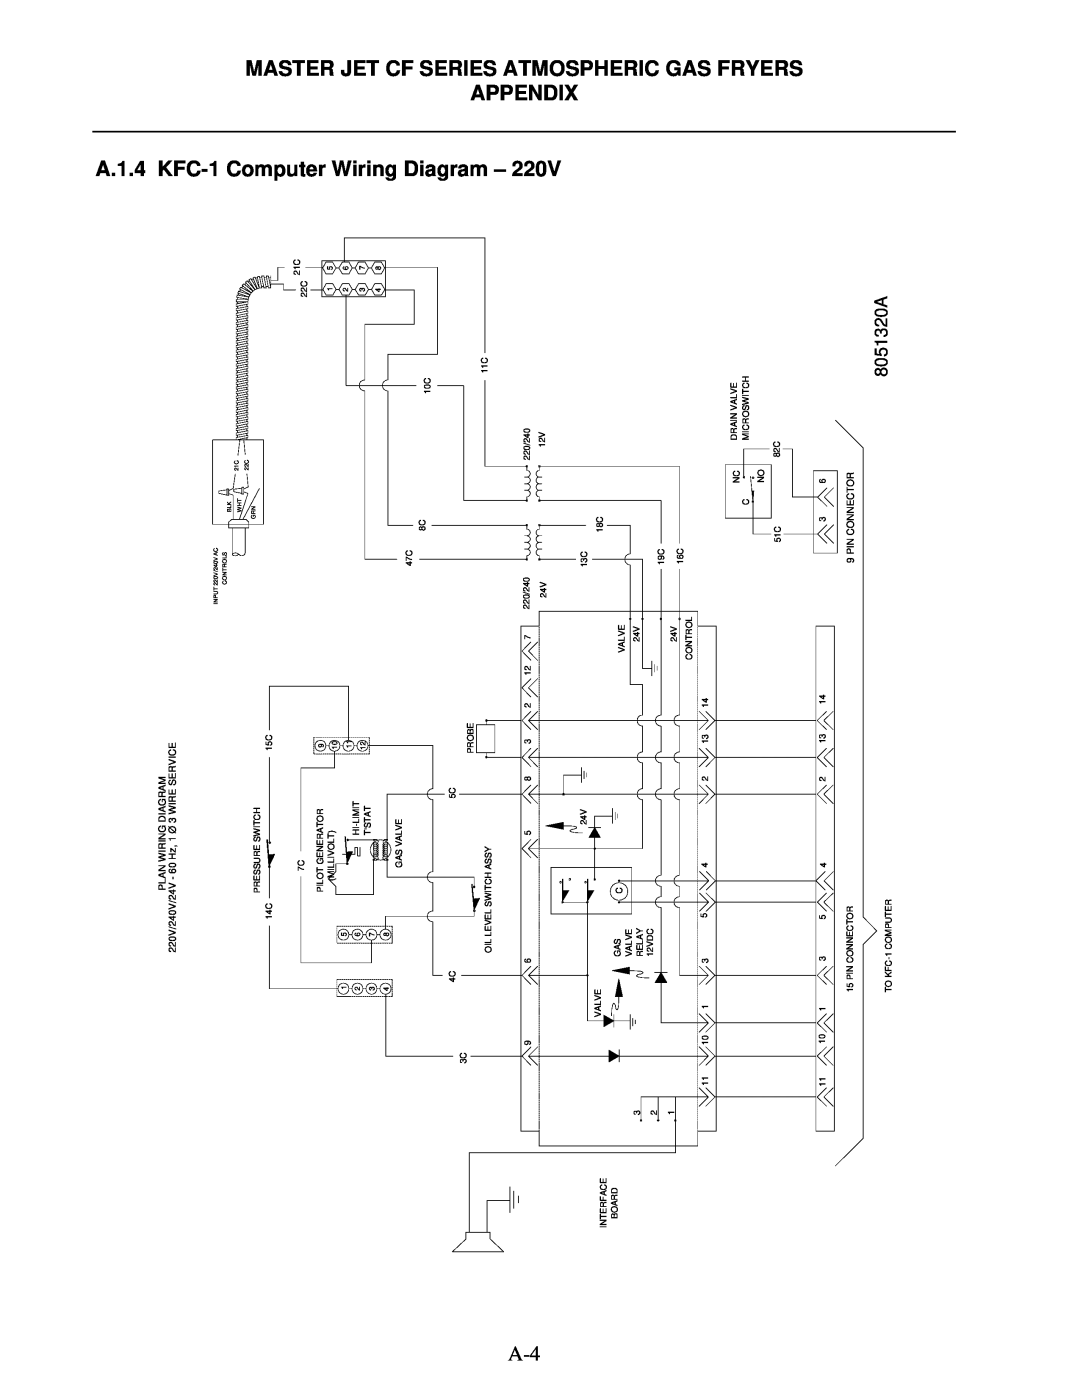 Frymaster JCFX, MJCFEC A.1.4 KFC, Computer Wiring Diagram, Master Jet Cf Series Atmospheric Gas Fryers Appendix, 8051320A 